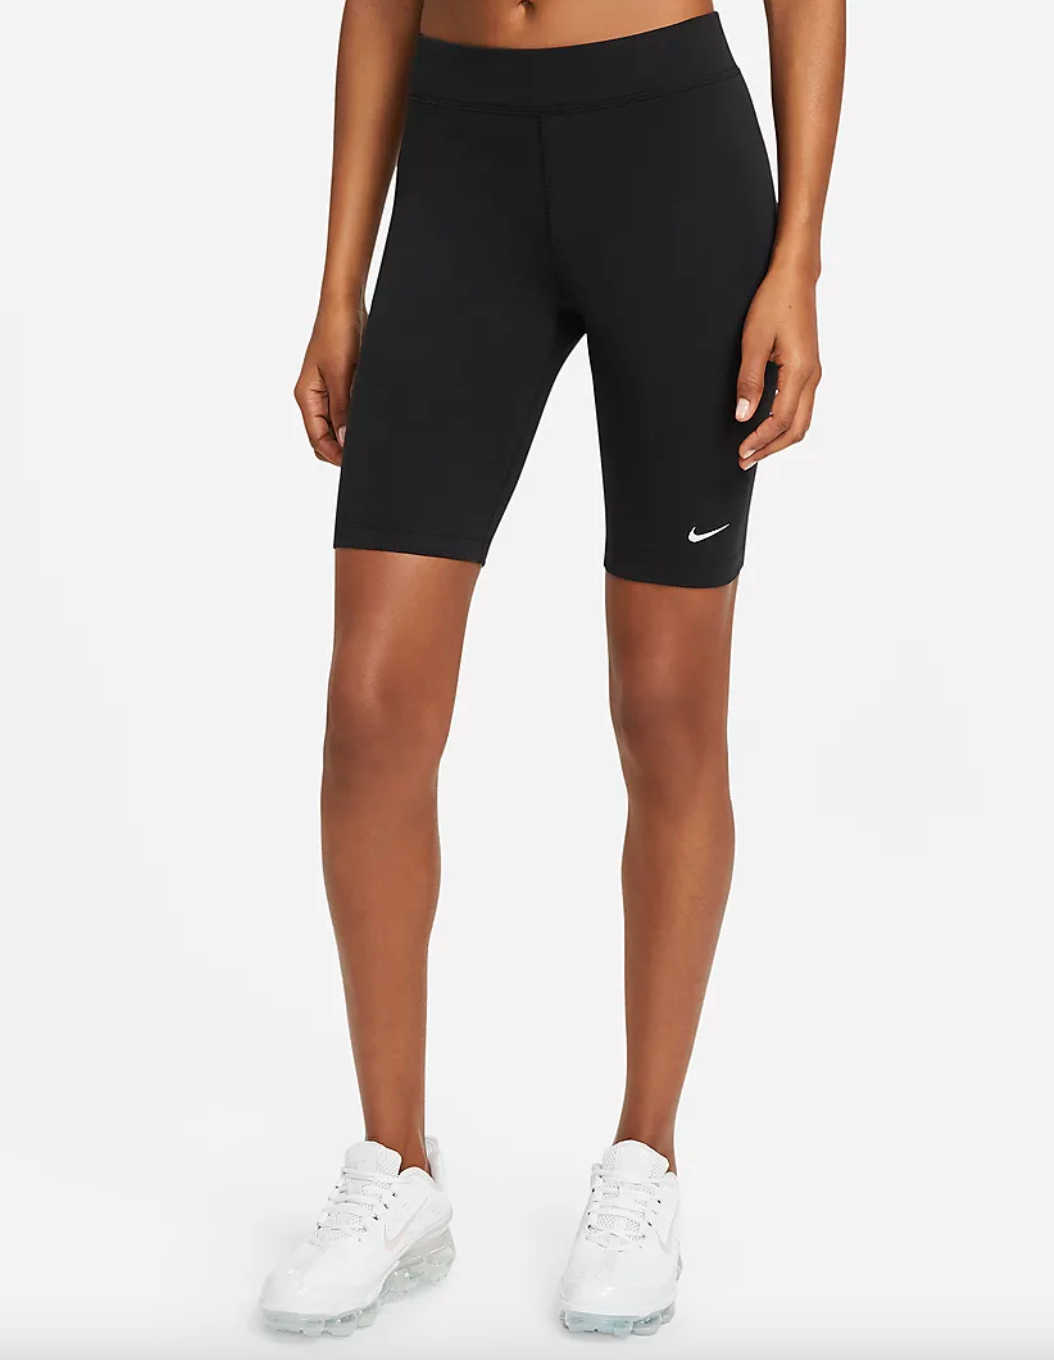 Nike + Women’s Mid-Rise Bike Shorts